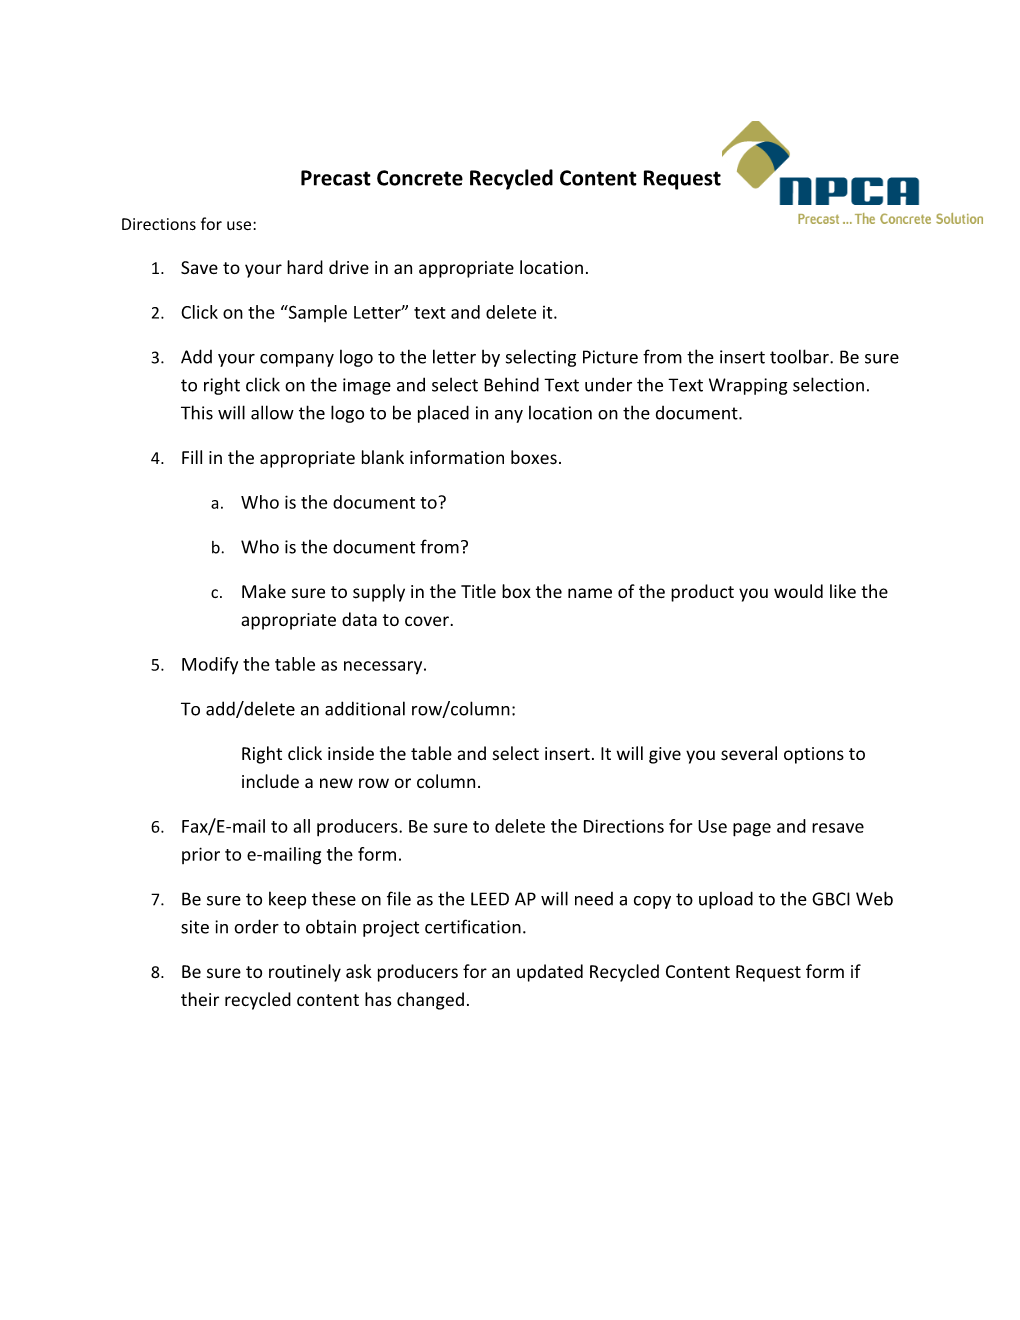 Precast Concrete Recycled Content Request s1